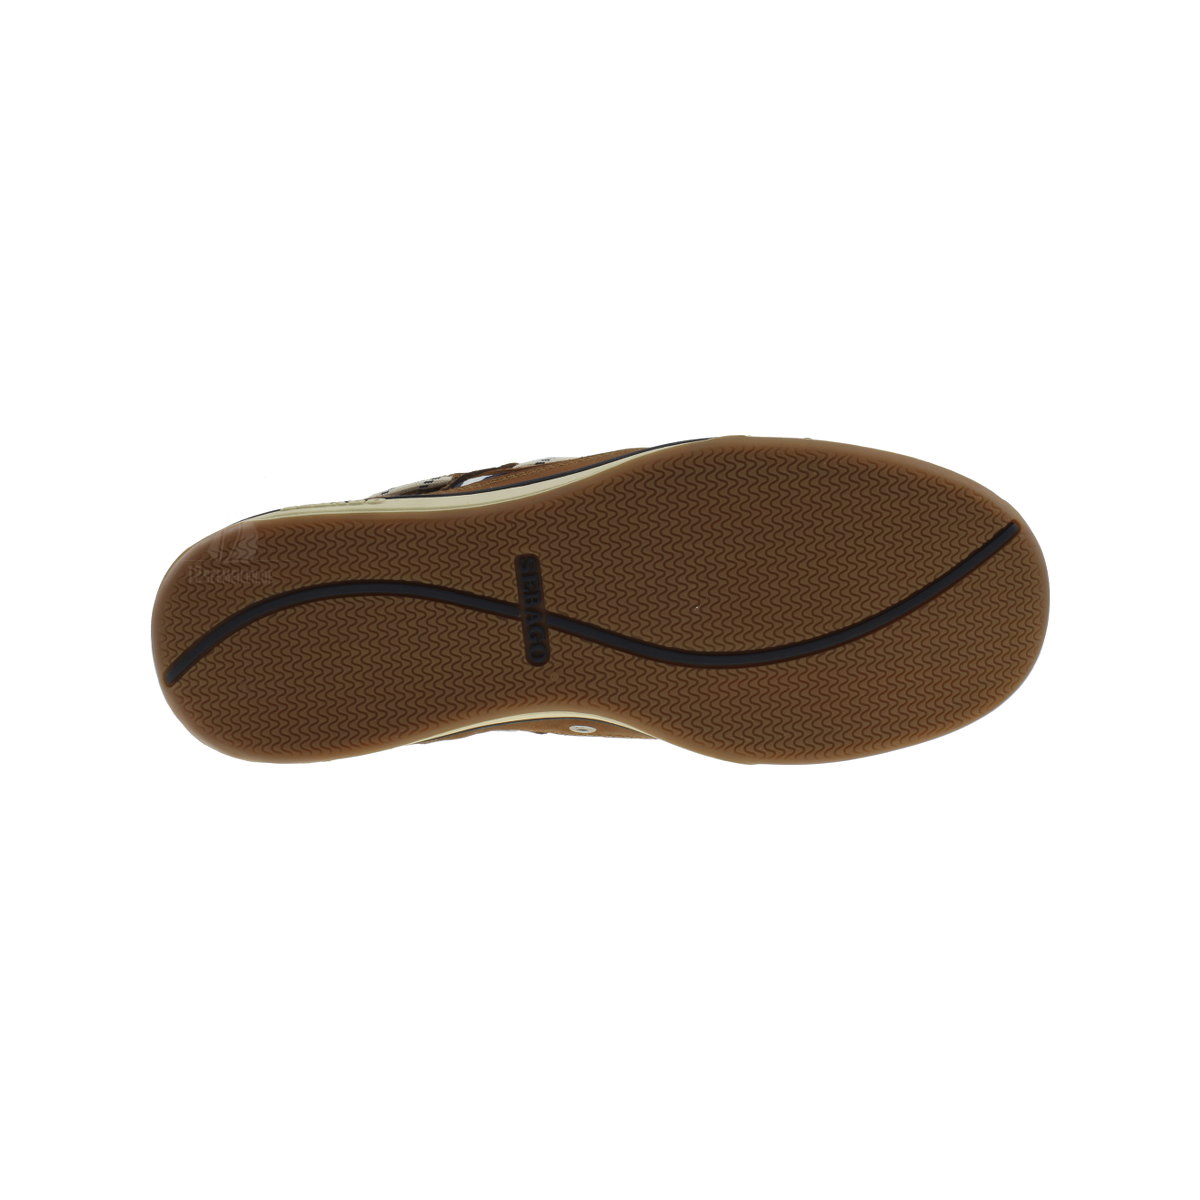 Sebago Triton Three-Eye bootschoen heren british tan/brown leather eu 42 (us 8,5)